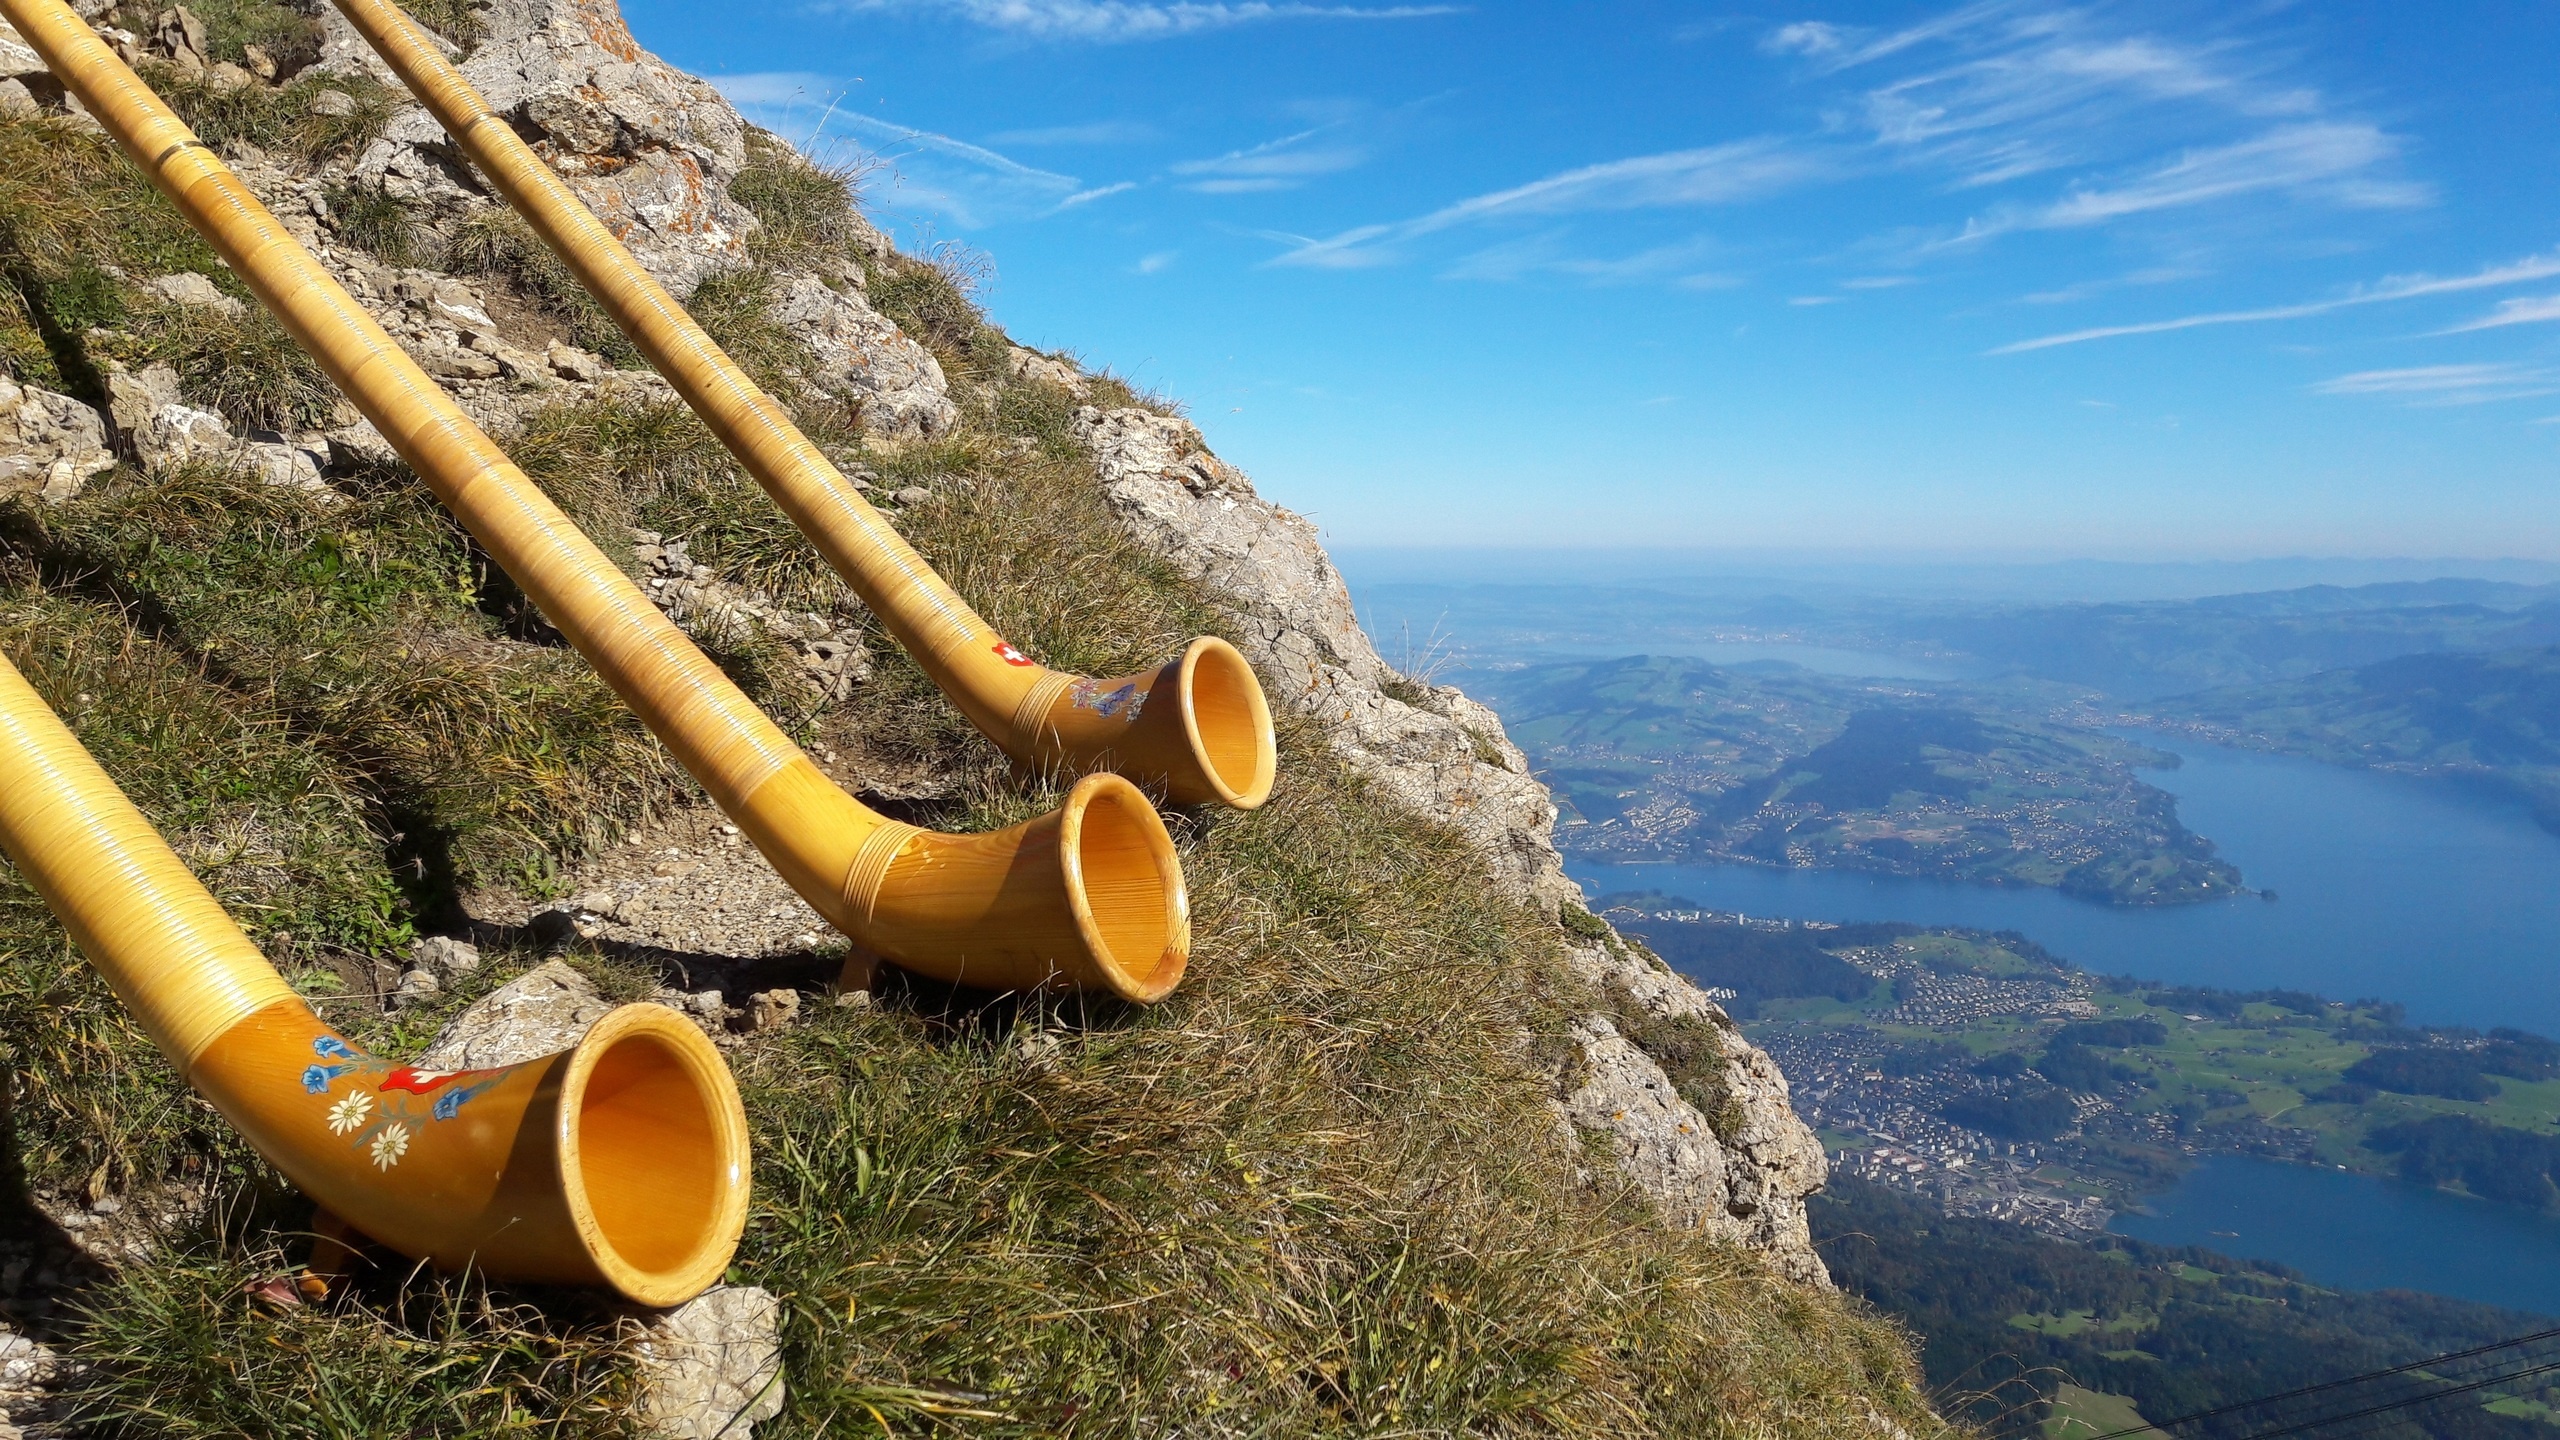 Alphorn: Swiss alpine shepherd culture, Spruce wood, Making a sound using this traditional musical instrument. 2560x1440 HD Wallpaper.